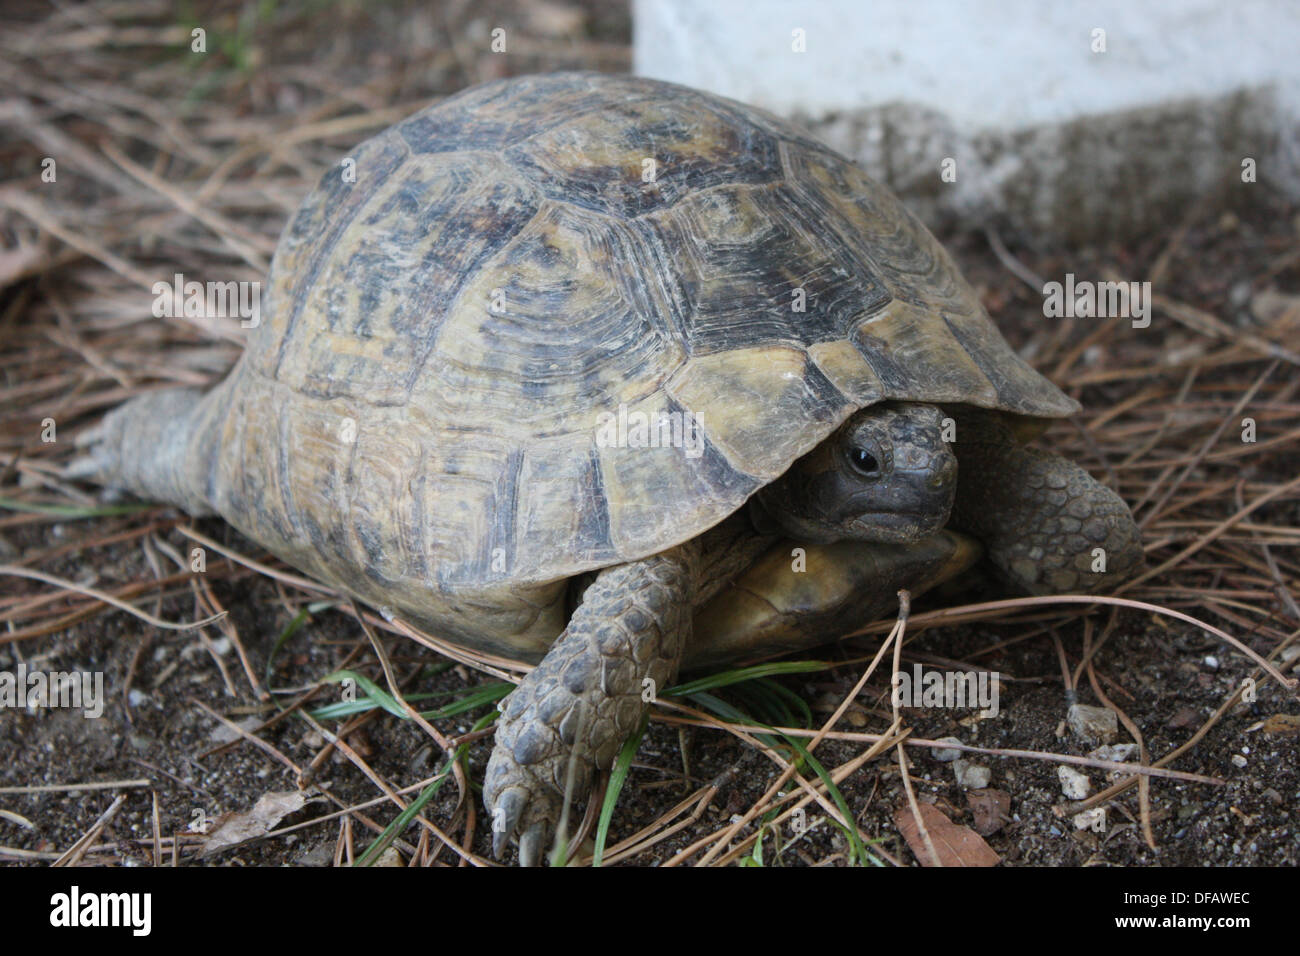 A tortoise peeking out of its shell. Stock Photo